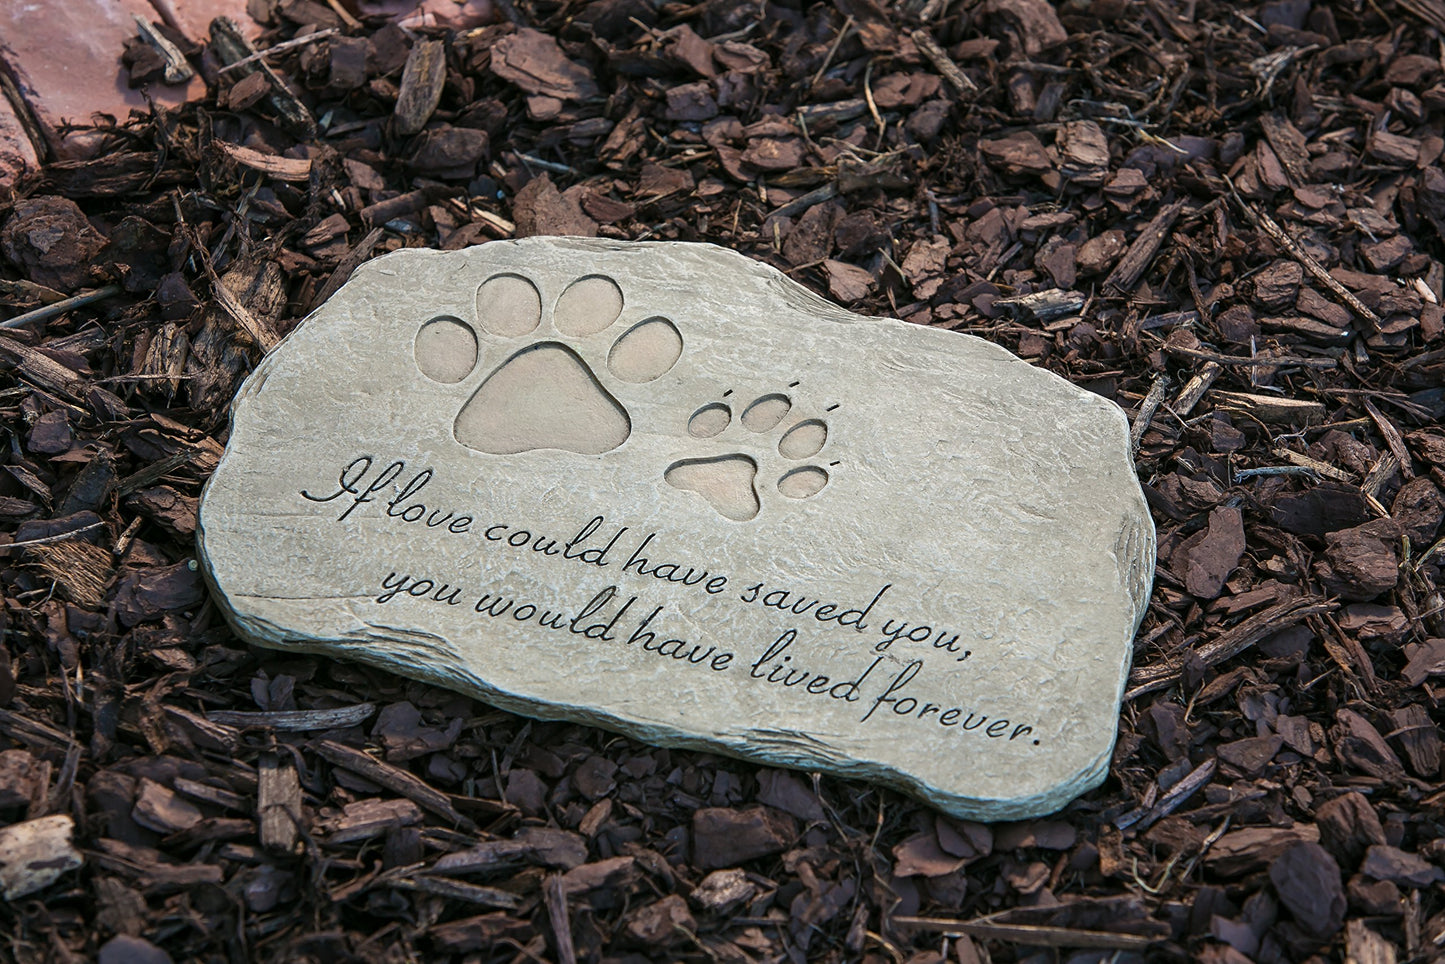 Evergreen Garden Pet Paw Print Devotion Painted Polystone Stepping Stone - 12”W x 0.5”D x 7.5”H